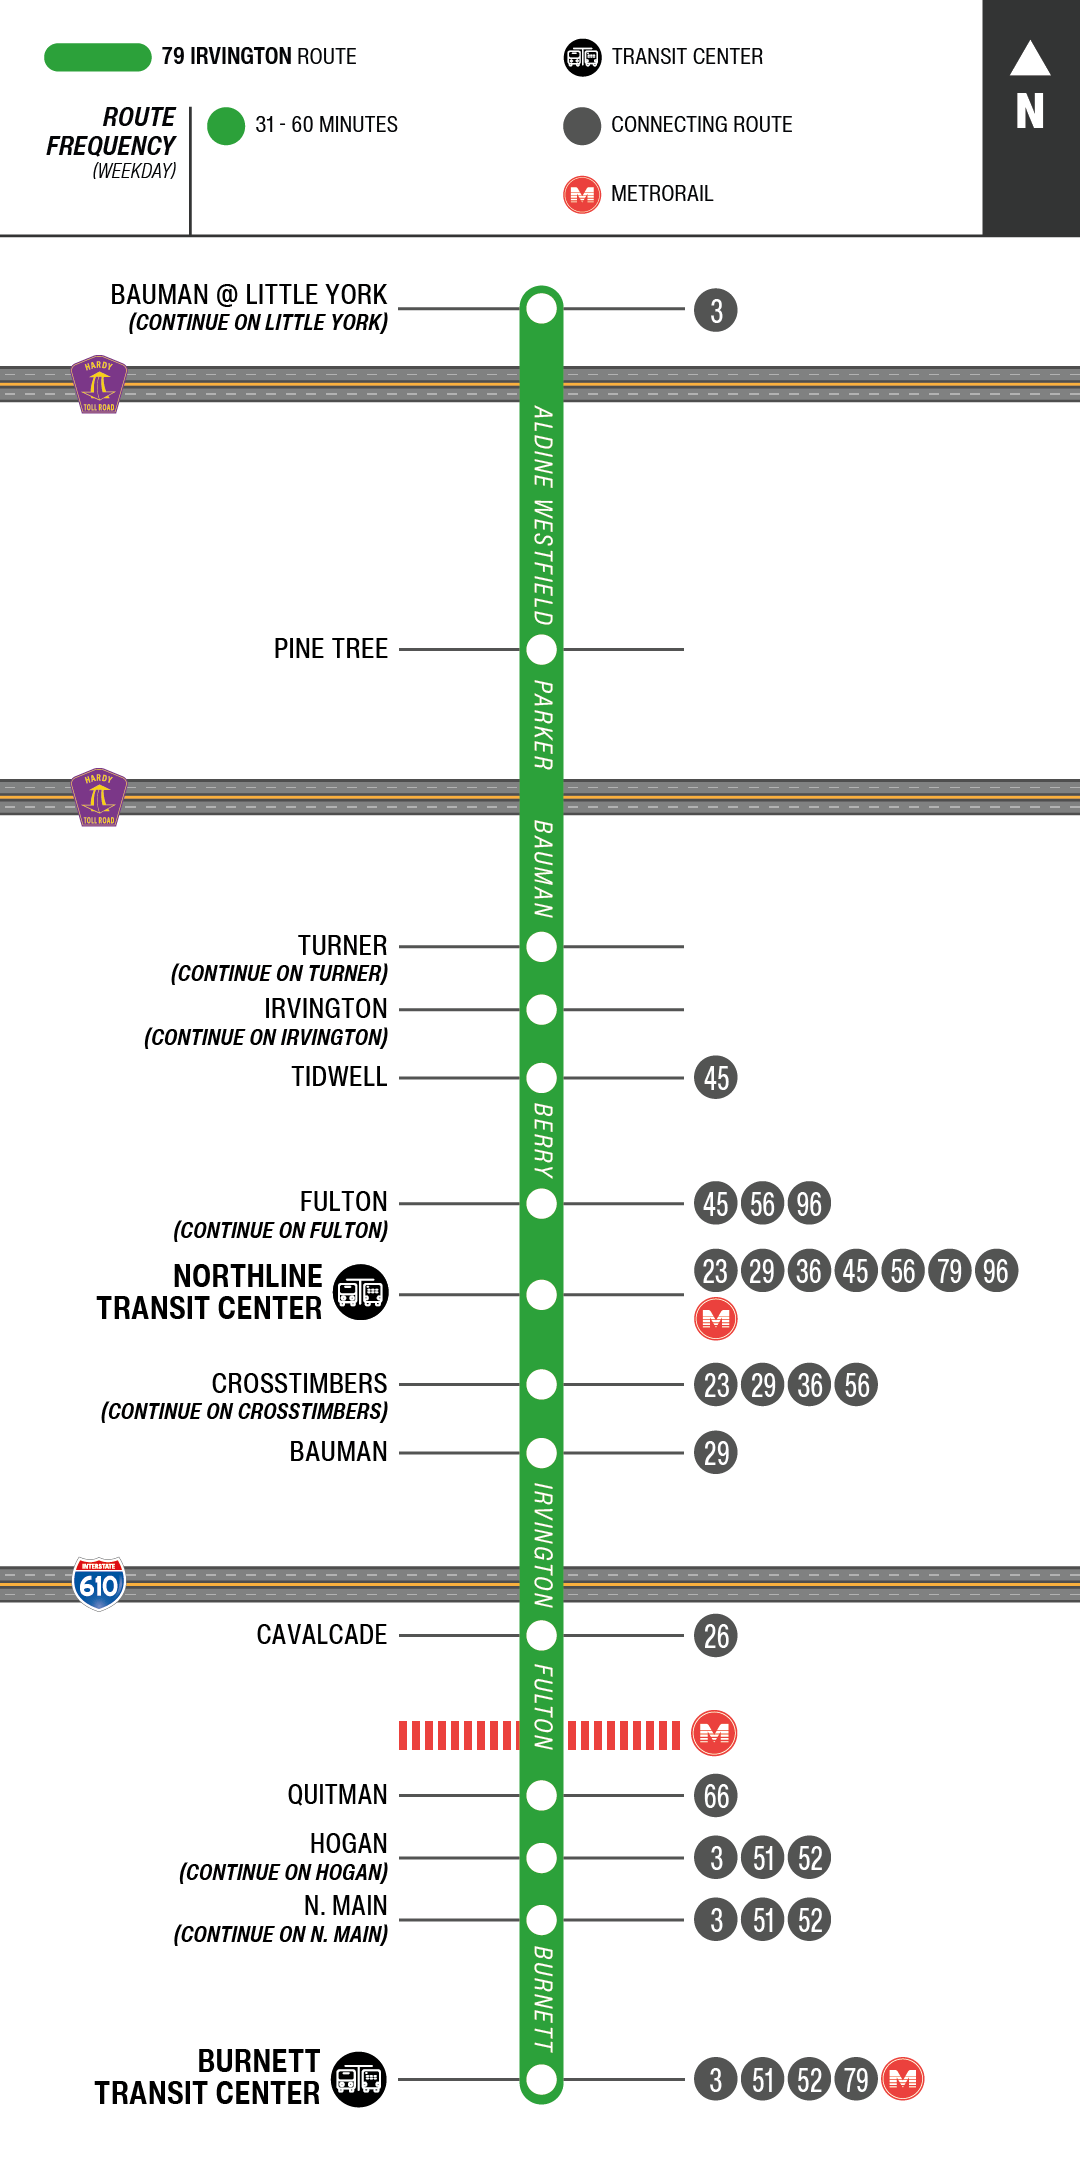 Route map for 79 Irvington bus